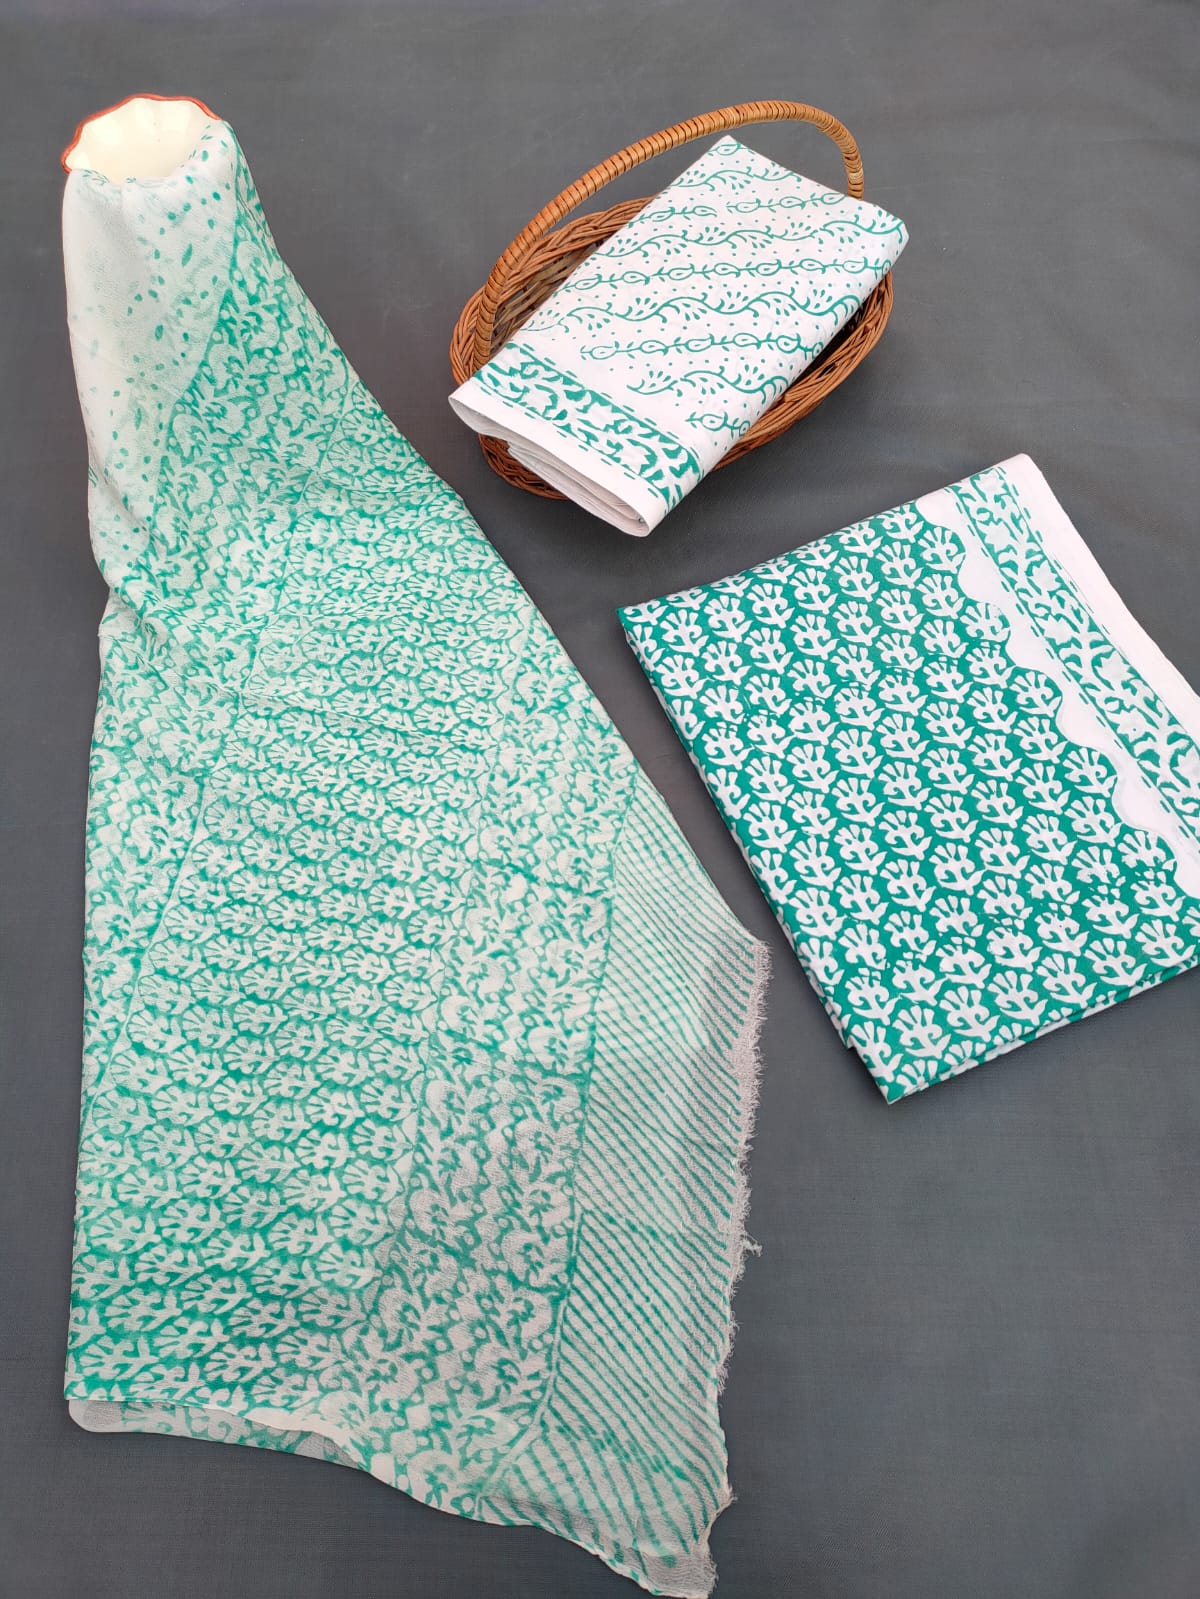 Jaipuri Unstitched Dress Material Hand Block Printed Cotton Suit With Chiffon Dupatta - JB651